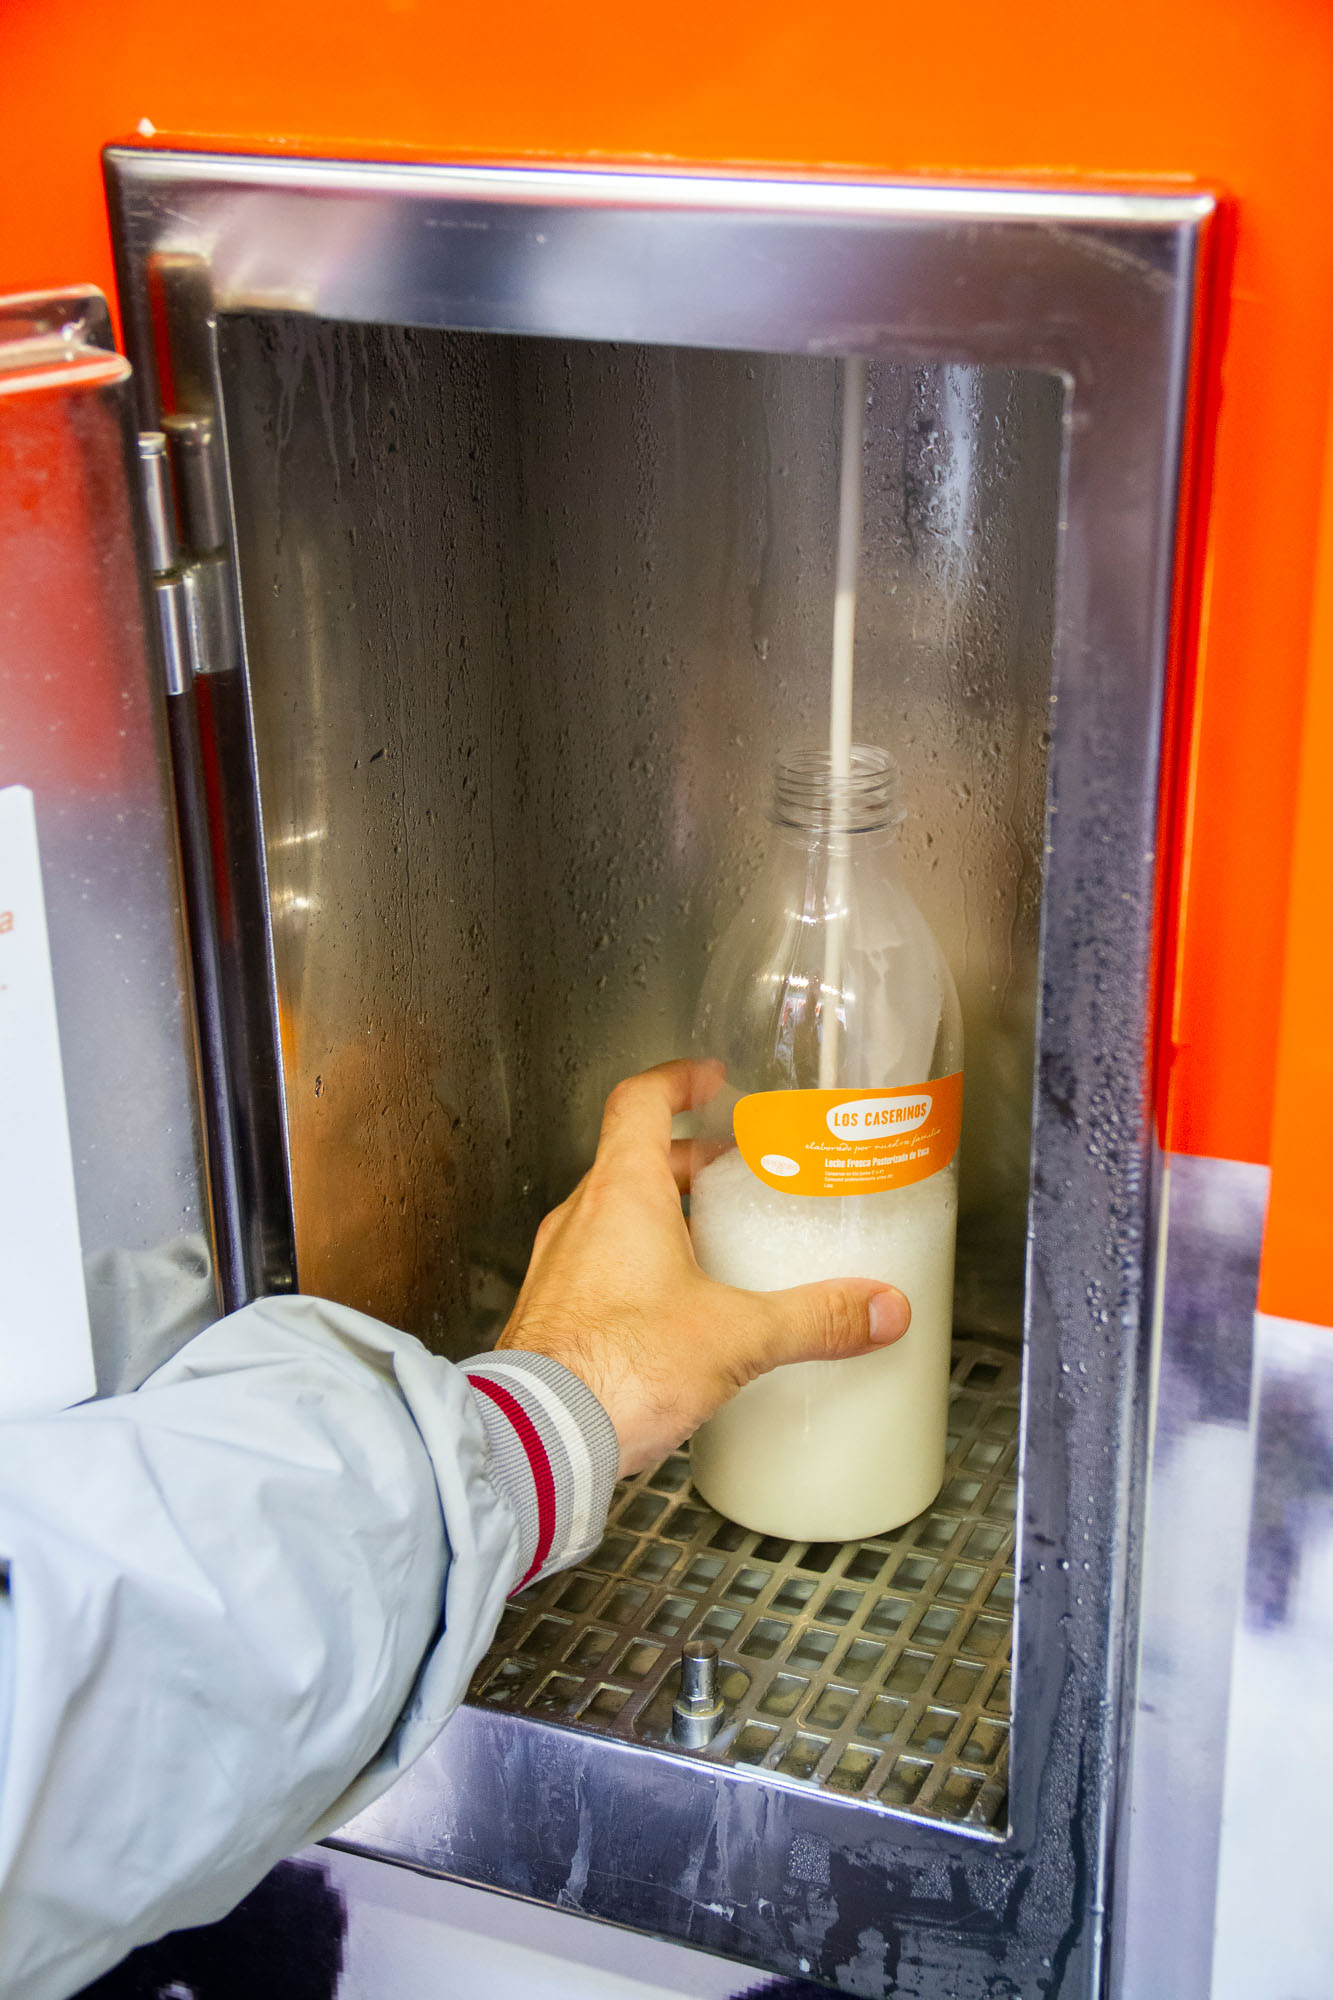 Pumping milk into glass bottle vending machine